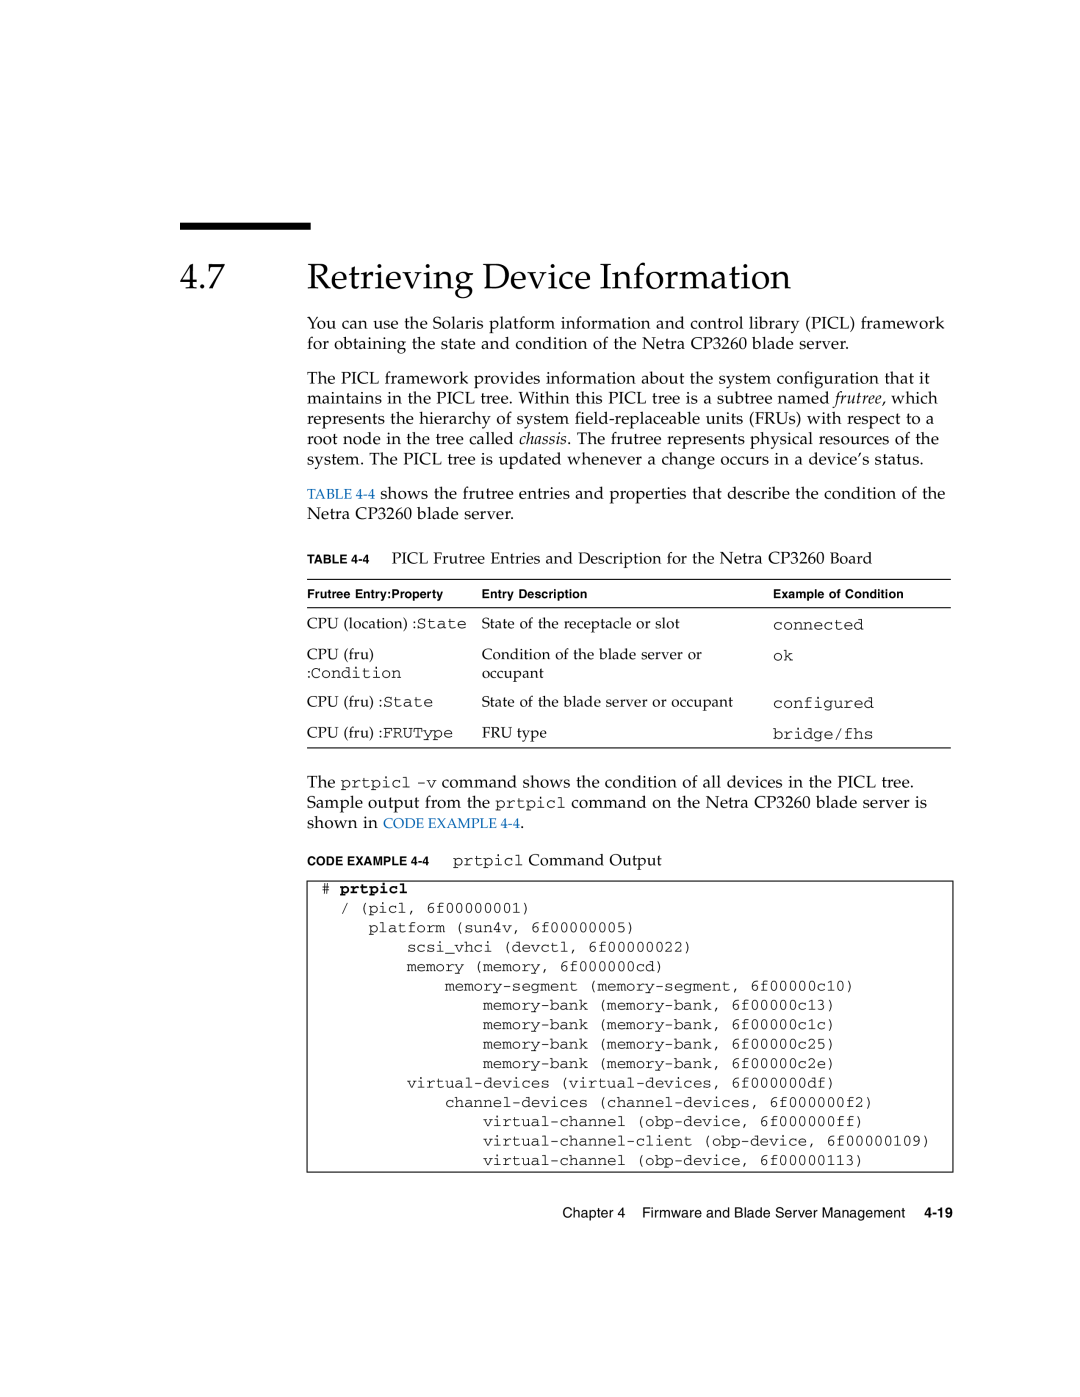 Sun Microsystems CP3260 manual Retrieving Device Information, Condition, connected ok configured bridge/fhs 